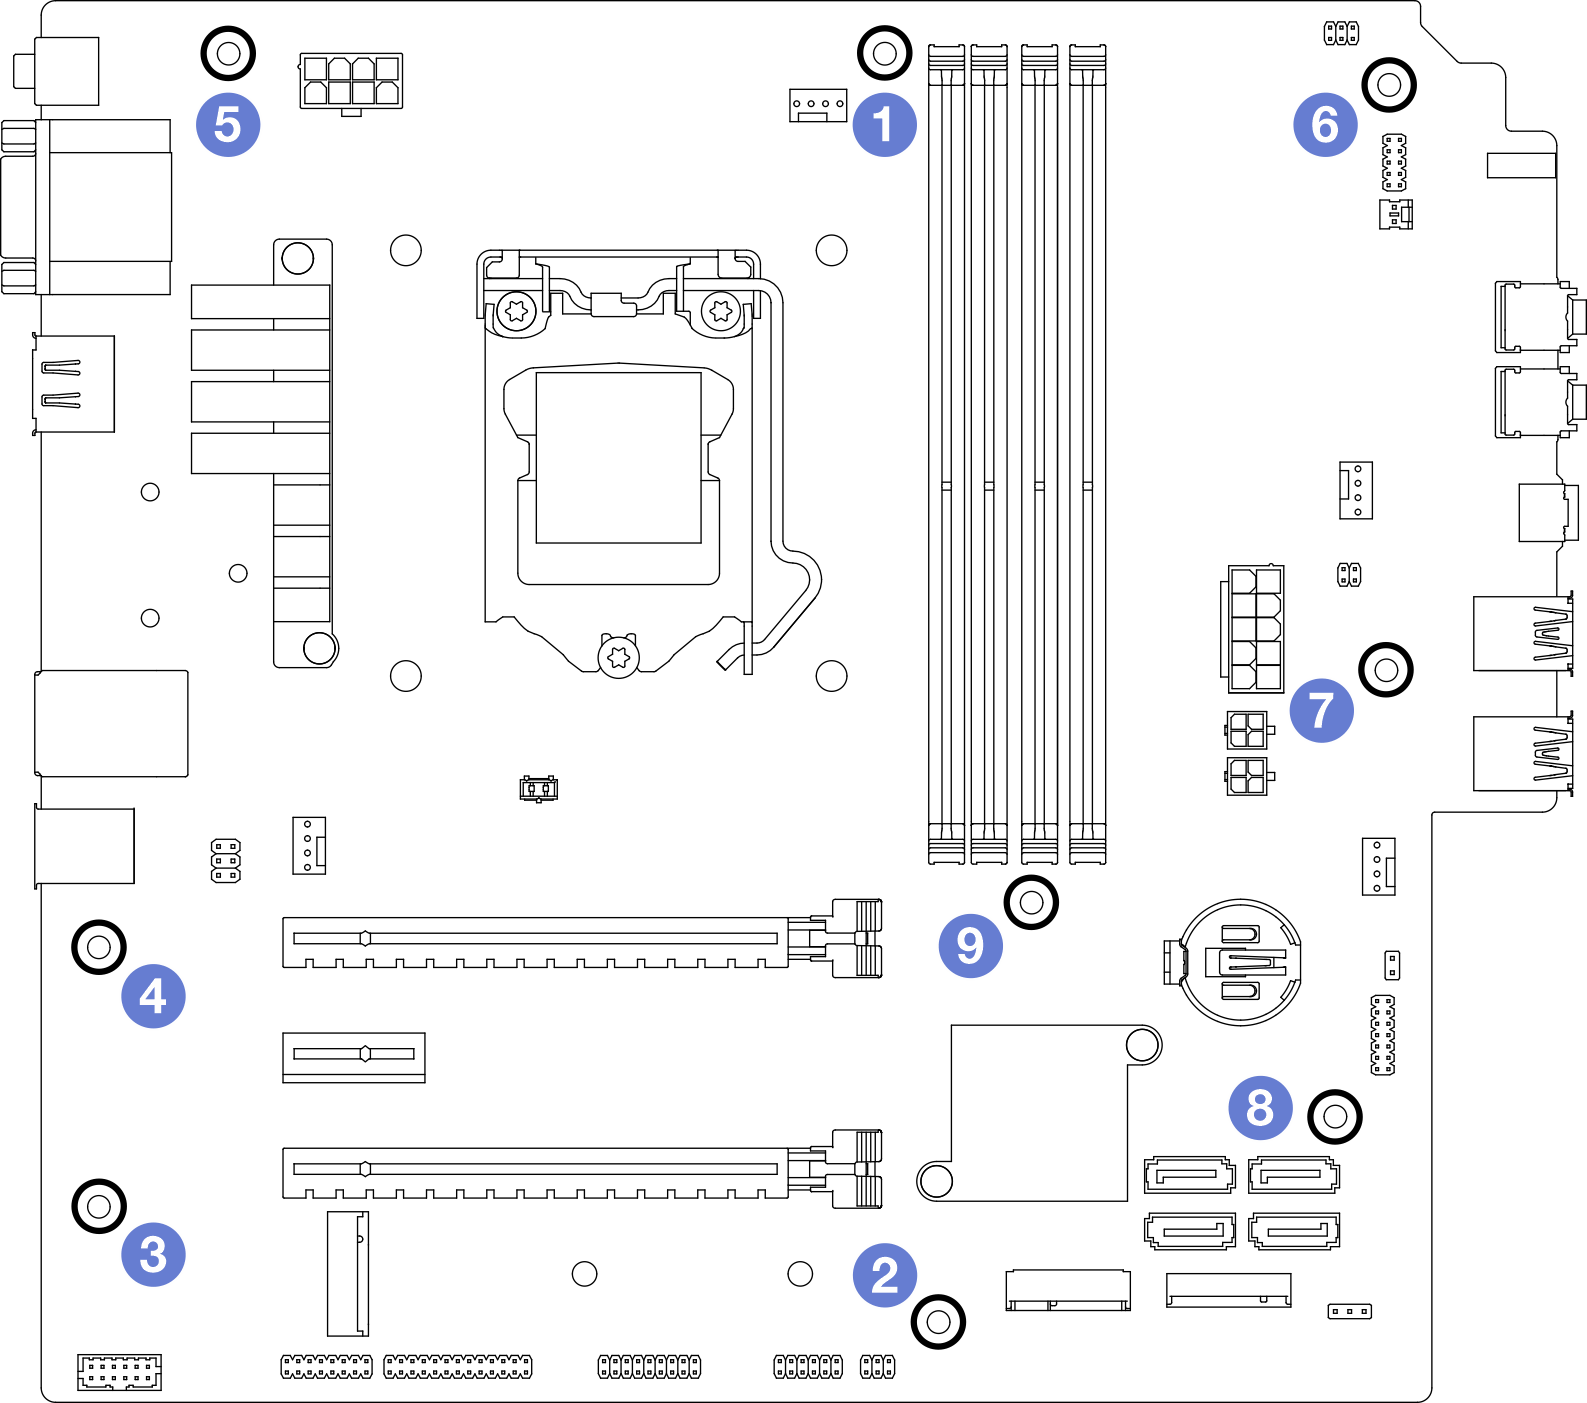 System-board screws installation sequence